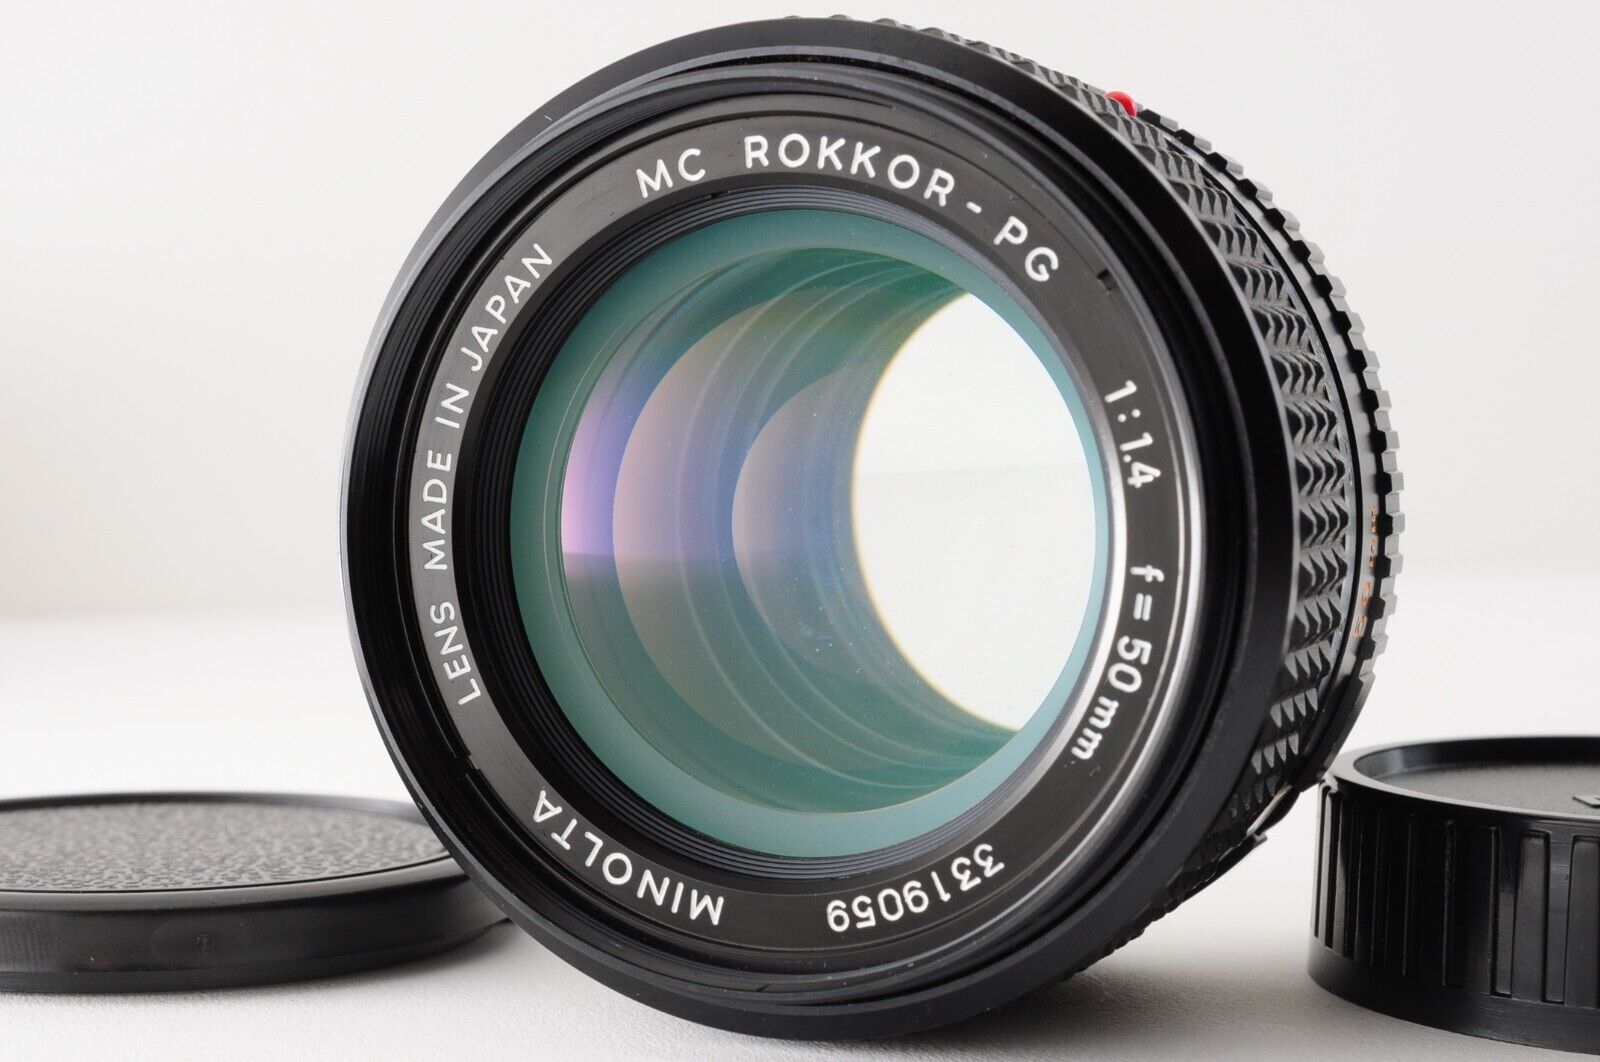 MINOLTA MC ROKKOR-PG 50mm f1.4 - レンズ(単焦点)